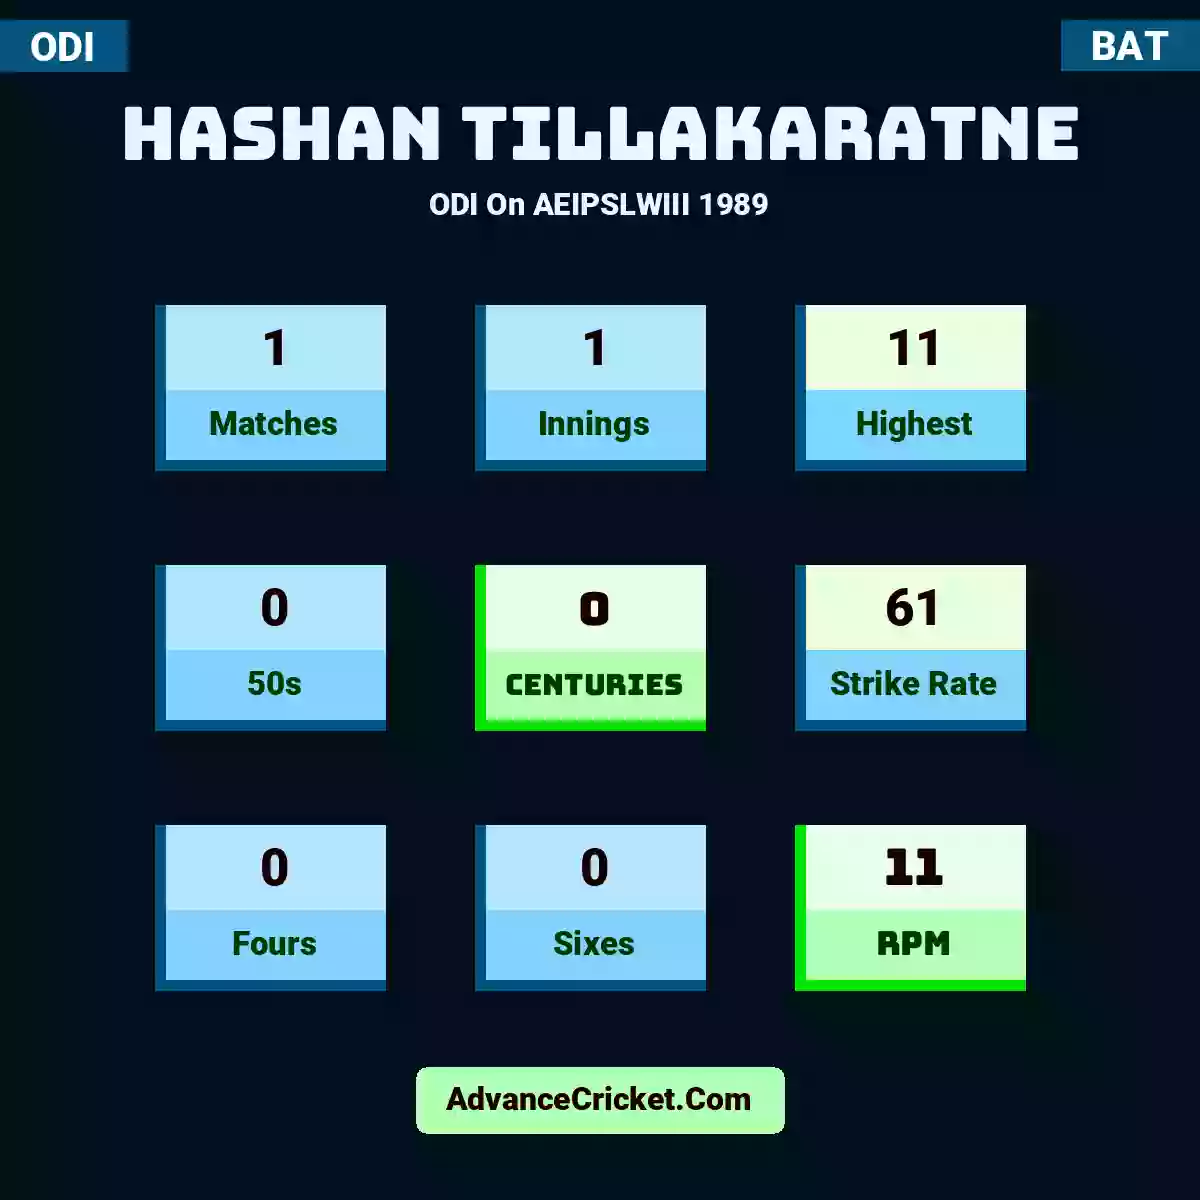 Hashan Tillakaratne ODI  On AEIPSLWIII 1989, Hashan Tillakaratne played 1 matches, scored 11 runs as highest, 0 half-centuries, and 0 centuries, with a strike rate of 61. H.Tillakaratne hit 0 fours and 0 sixes, with an RPM of 11.